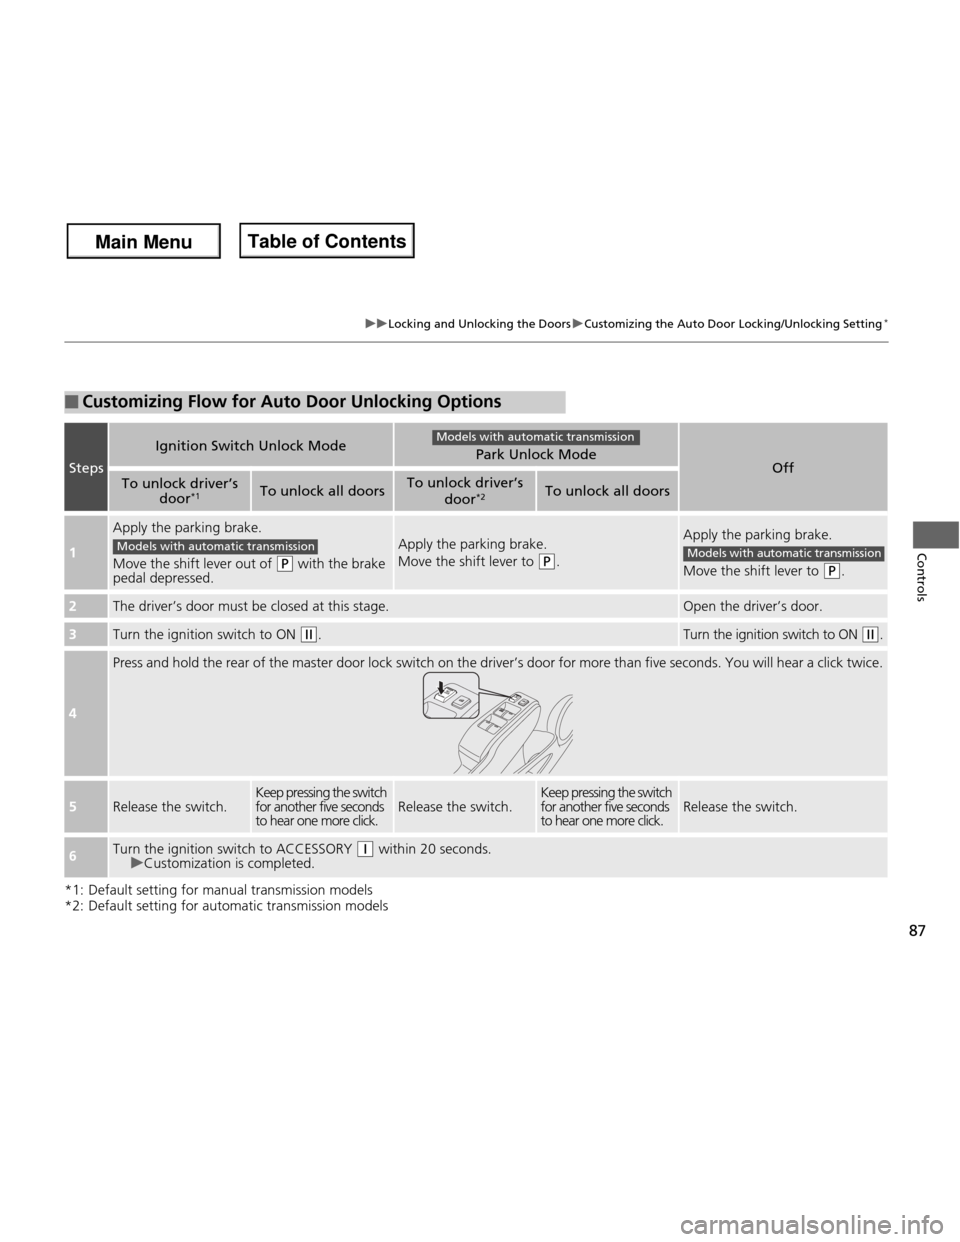 HONDA FIT 2013 3.G Owners Manual 87
uuLocking and Unlocking the DoorsuCustomizing the Auto Door Locking/Unlocking Setting*
Controls
*1: Default setting for manual transmission models 
*2: Default setting for automatic transmission mo